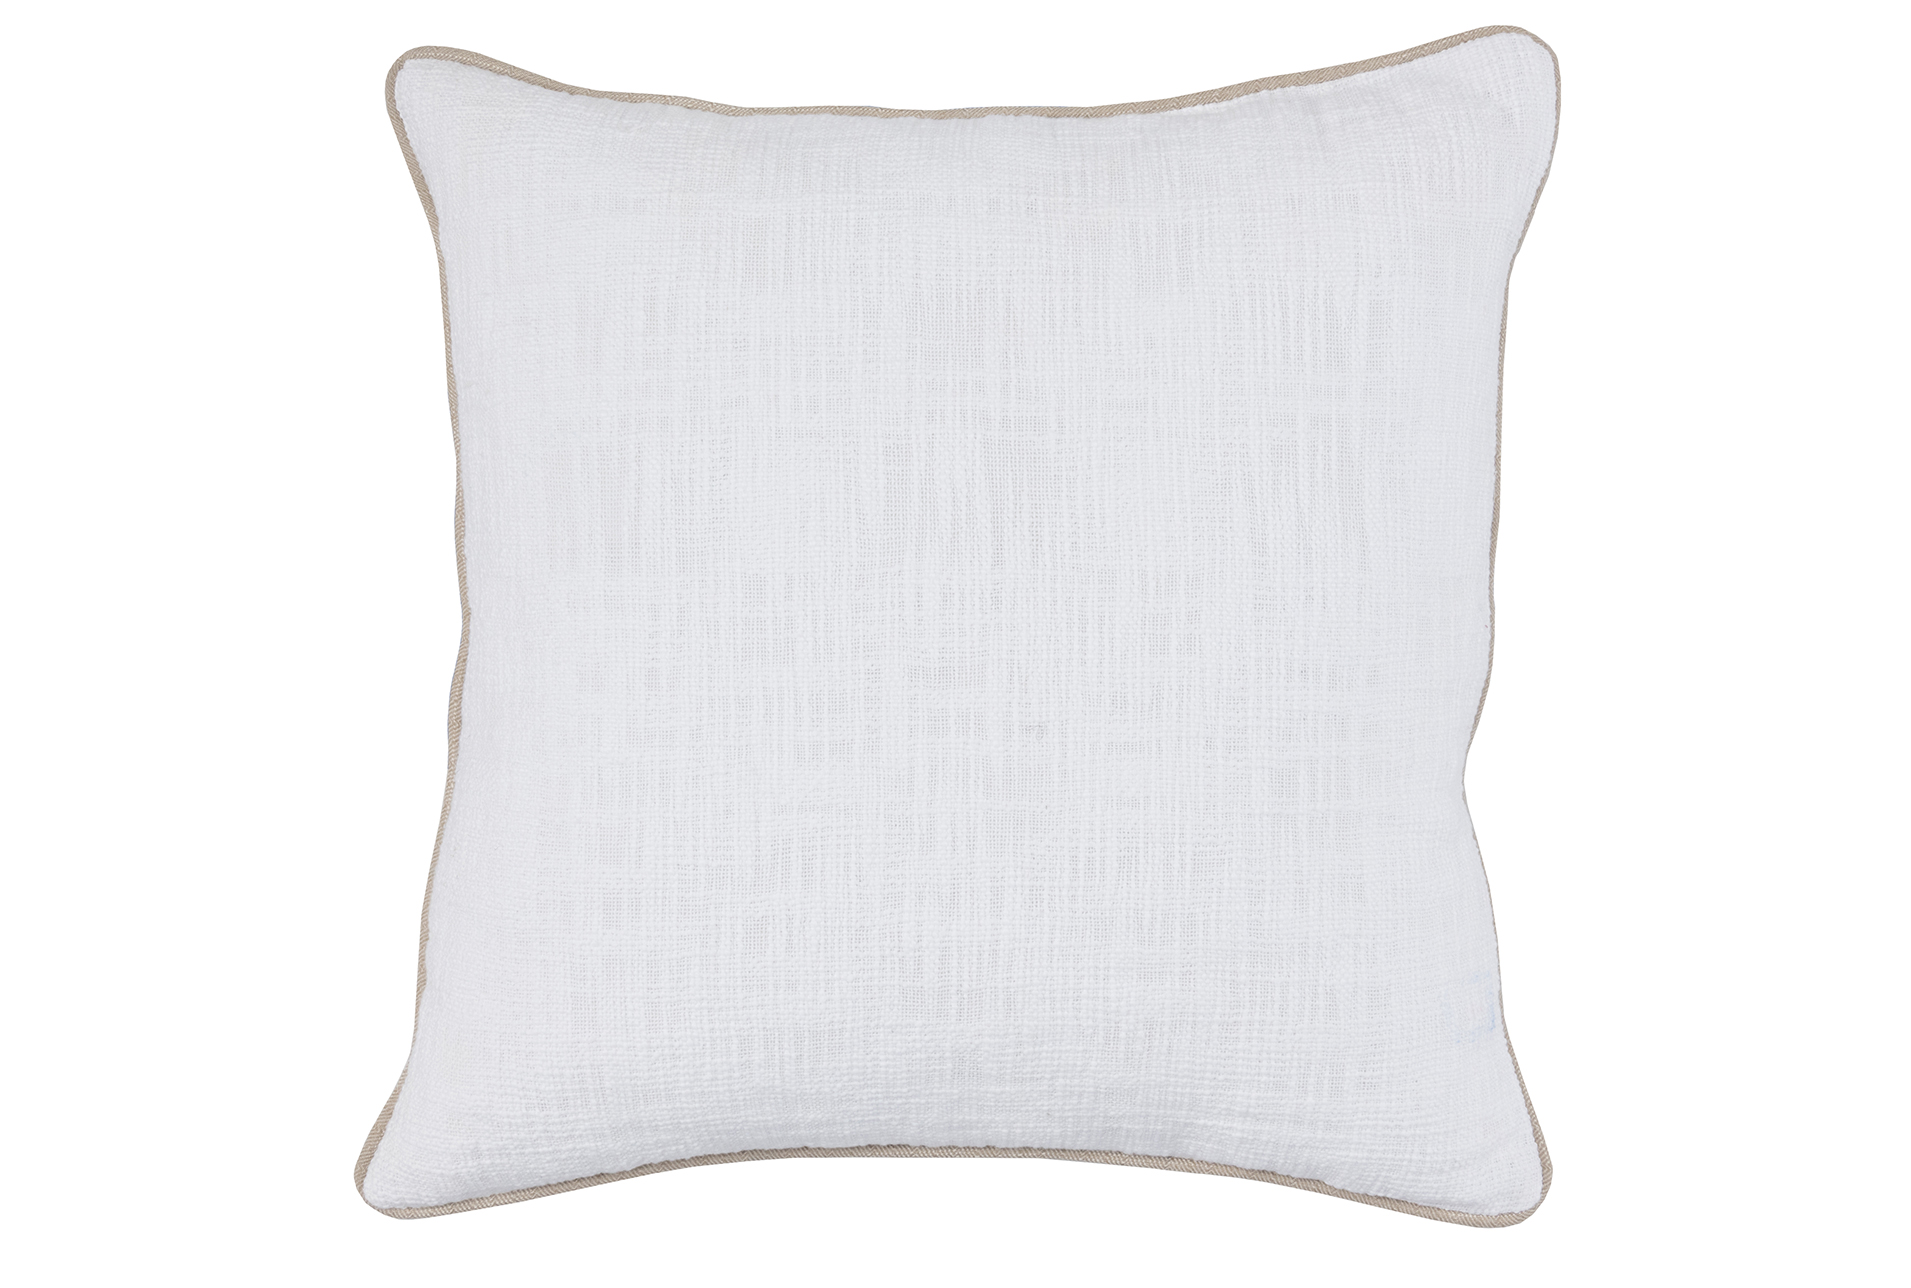 white pillows with black trim